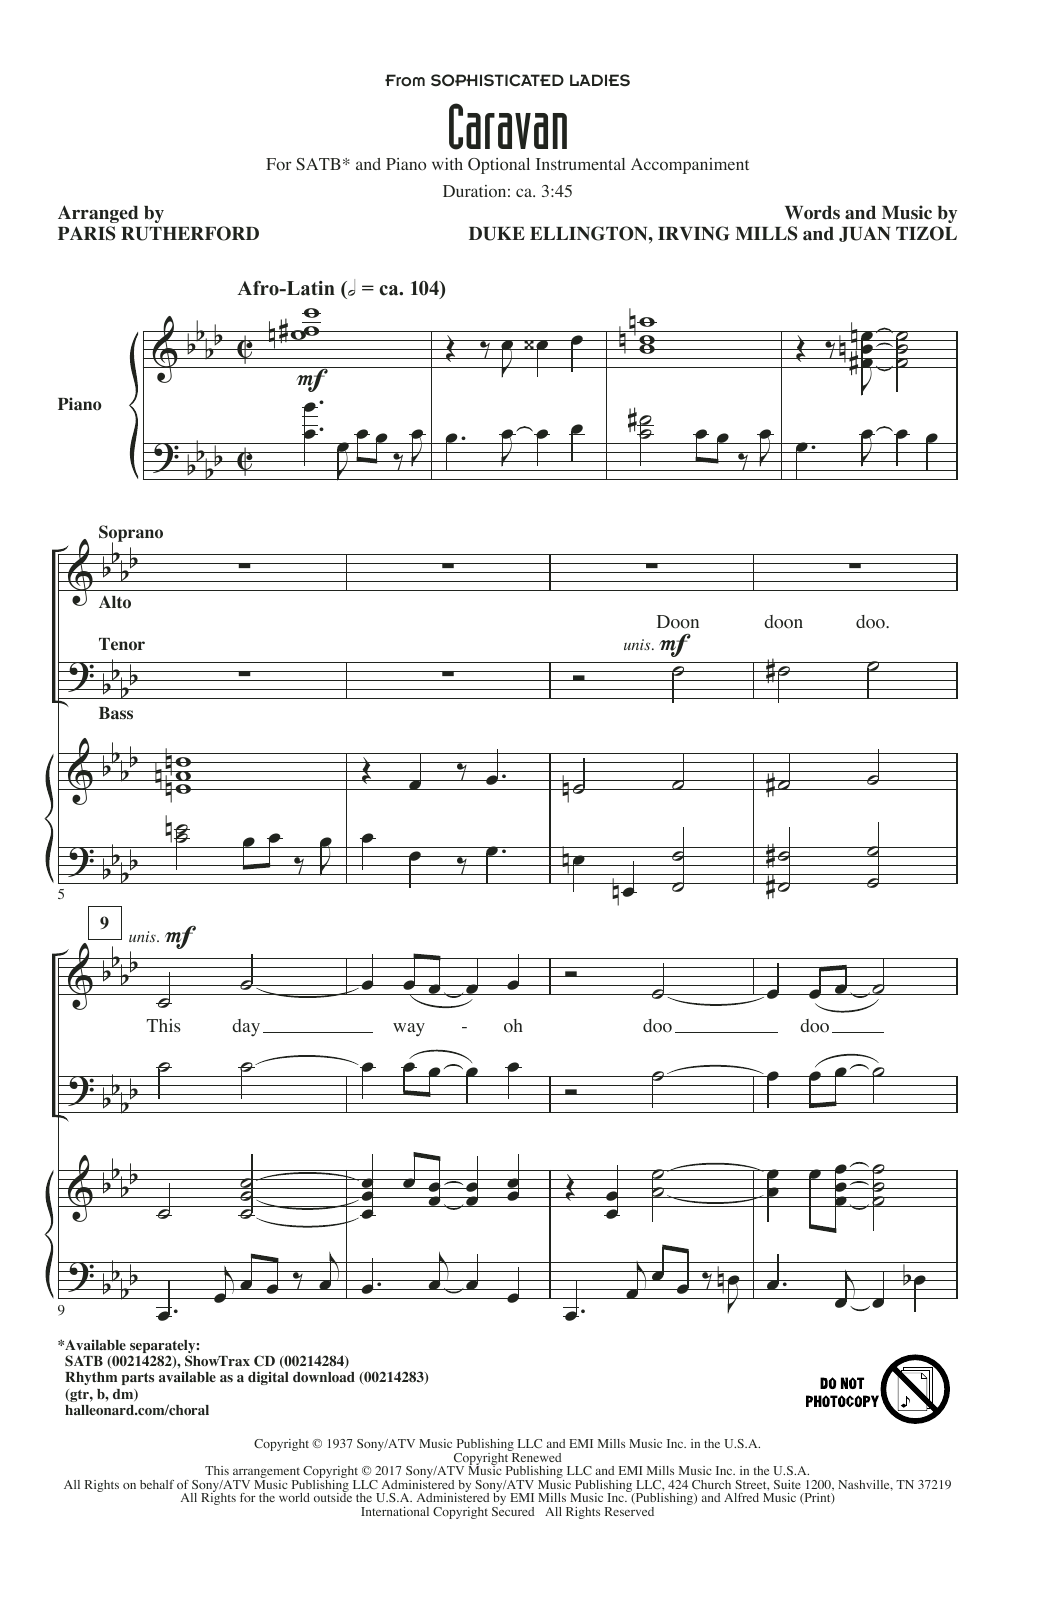 Paris Rutherford Caravan Sheet Music Notes & Chords for SATB - Download or Print PDF